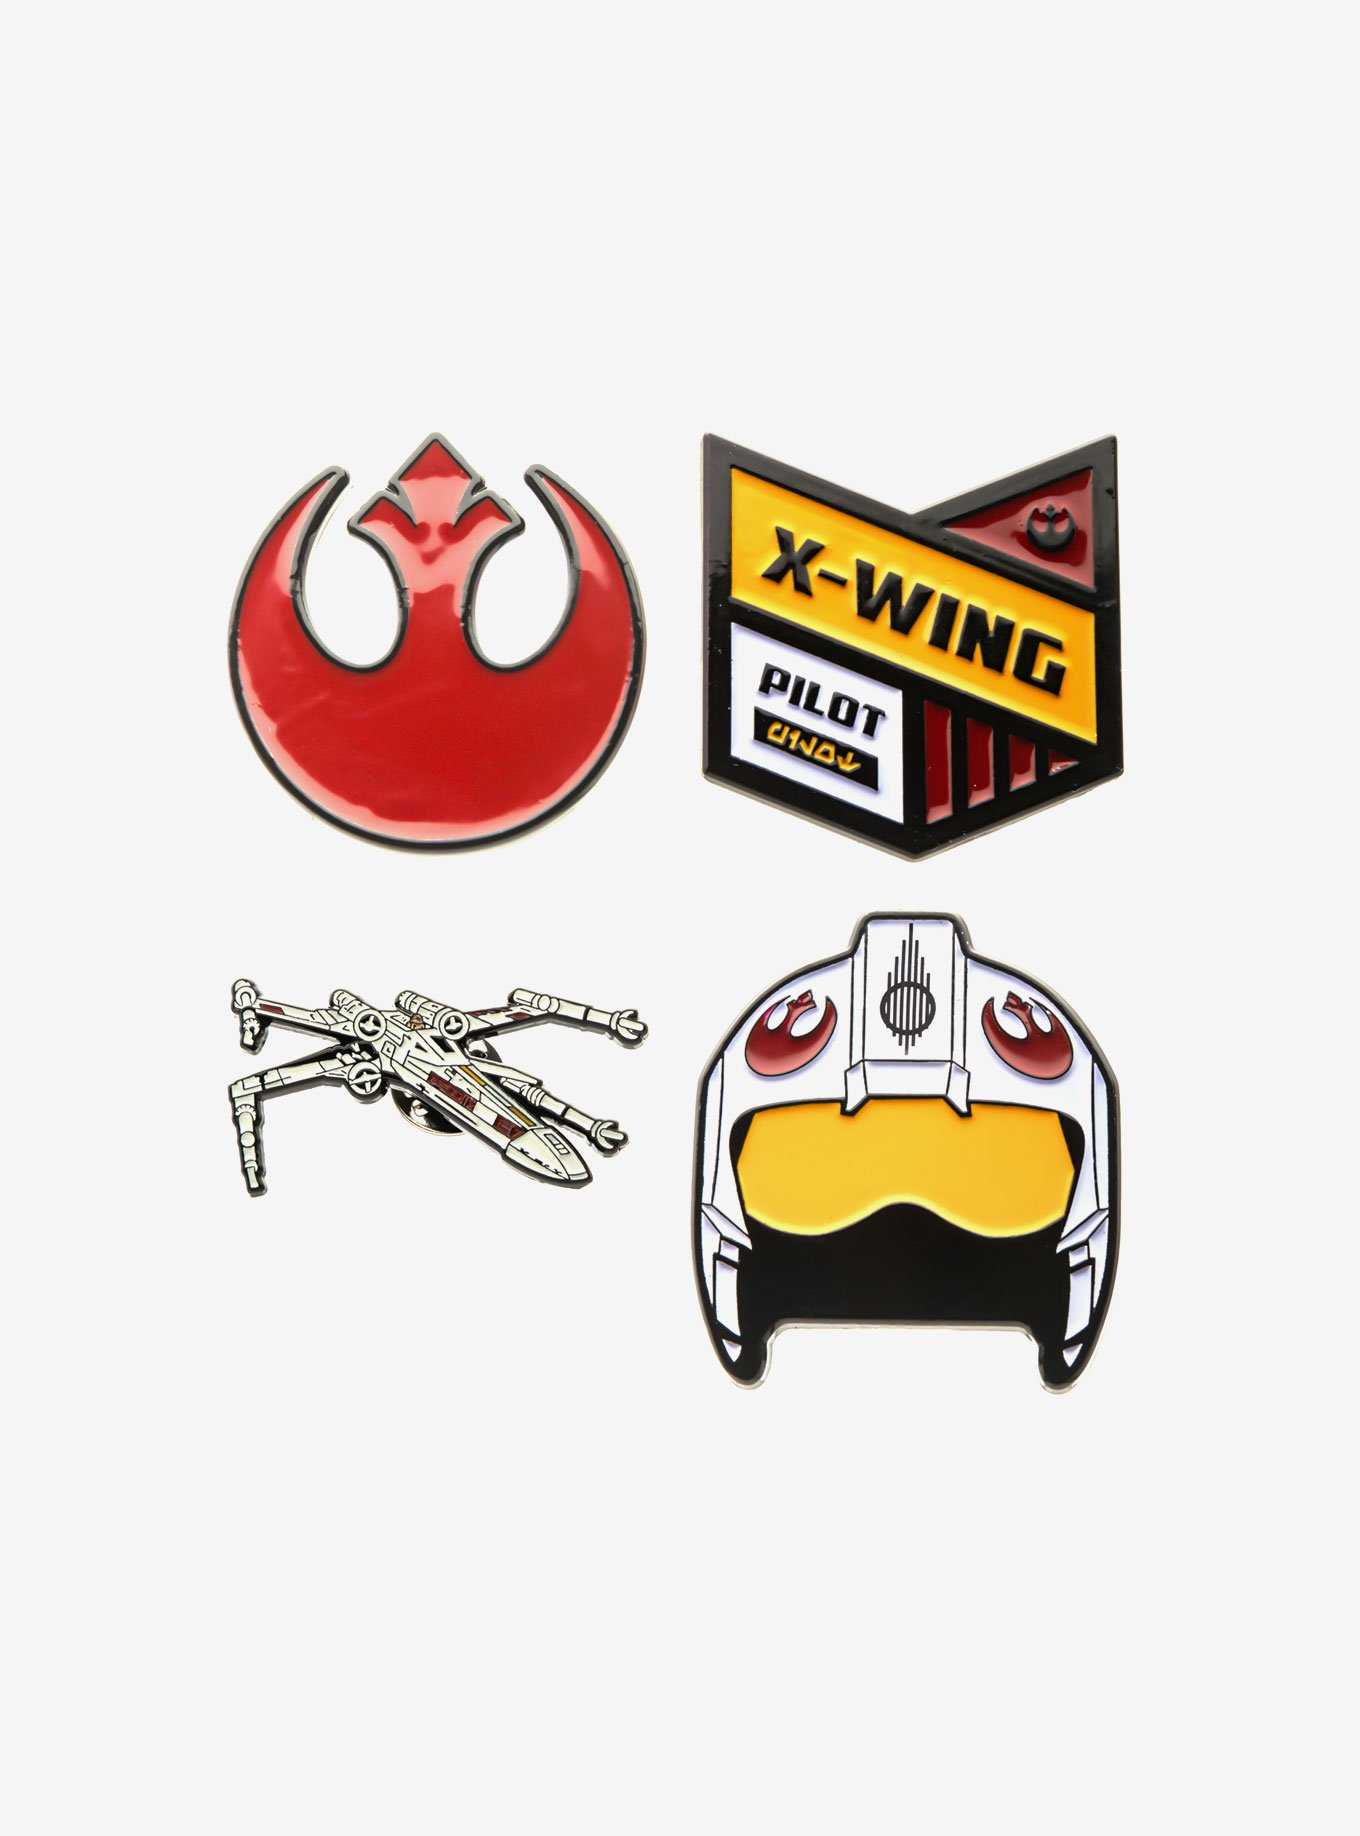 Star Wars Rebel Alliance Symbol and X-Wing Fighter Pin Set, , hi-res